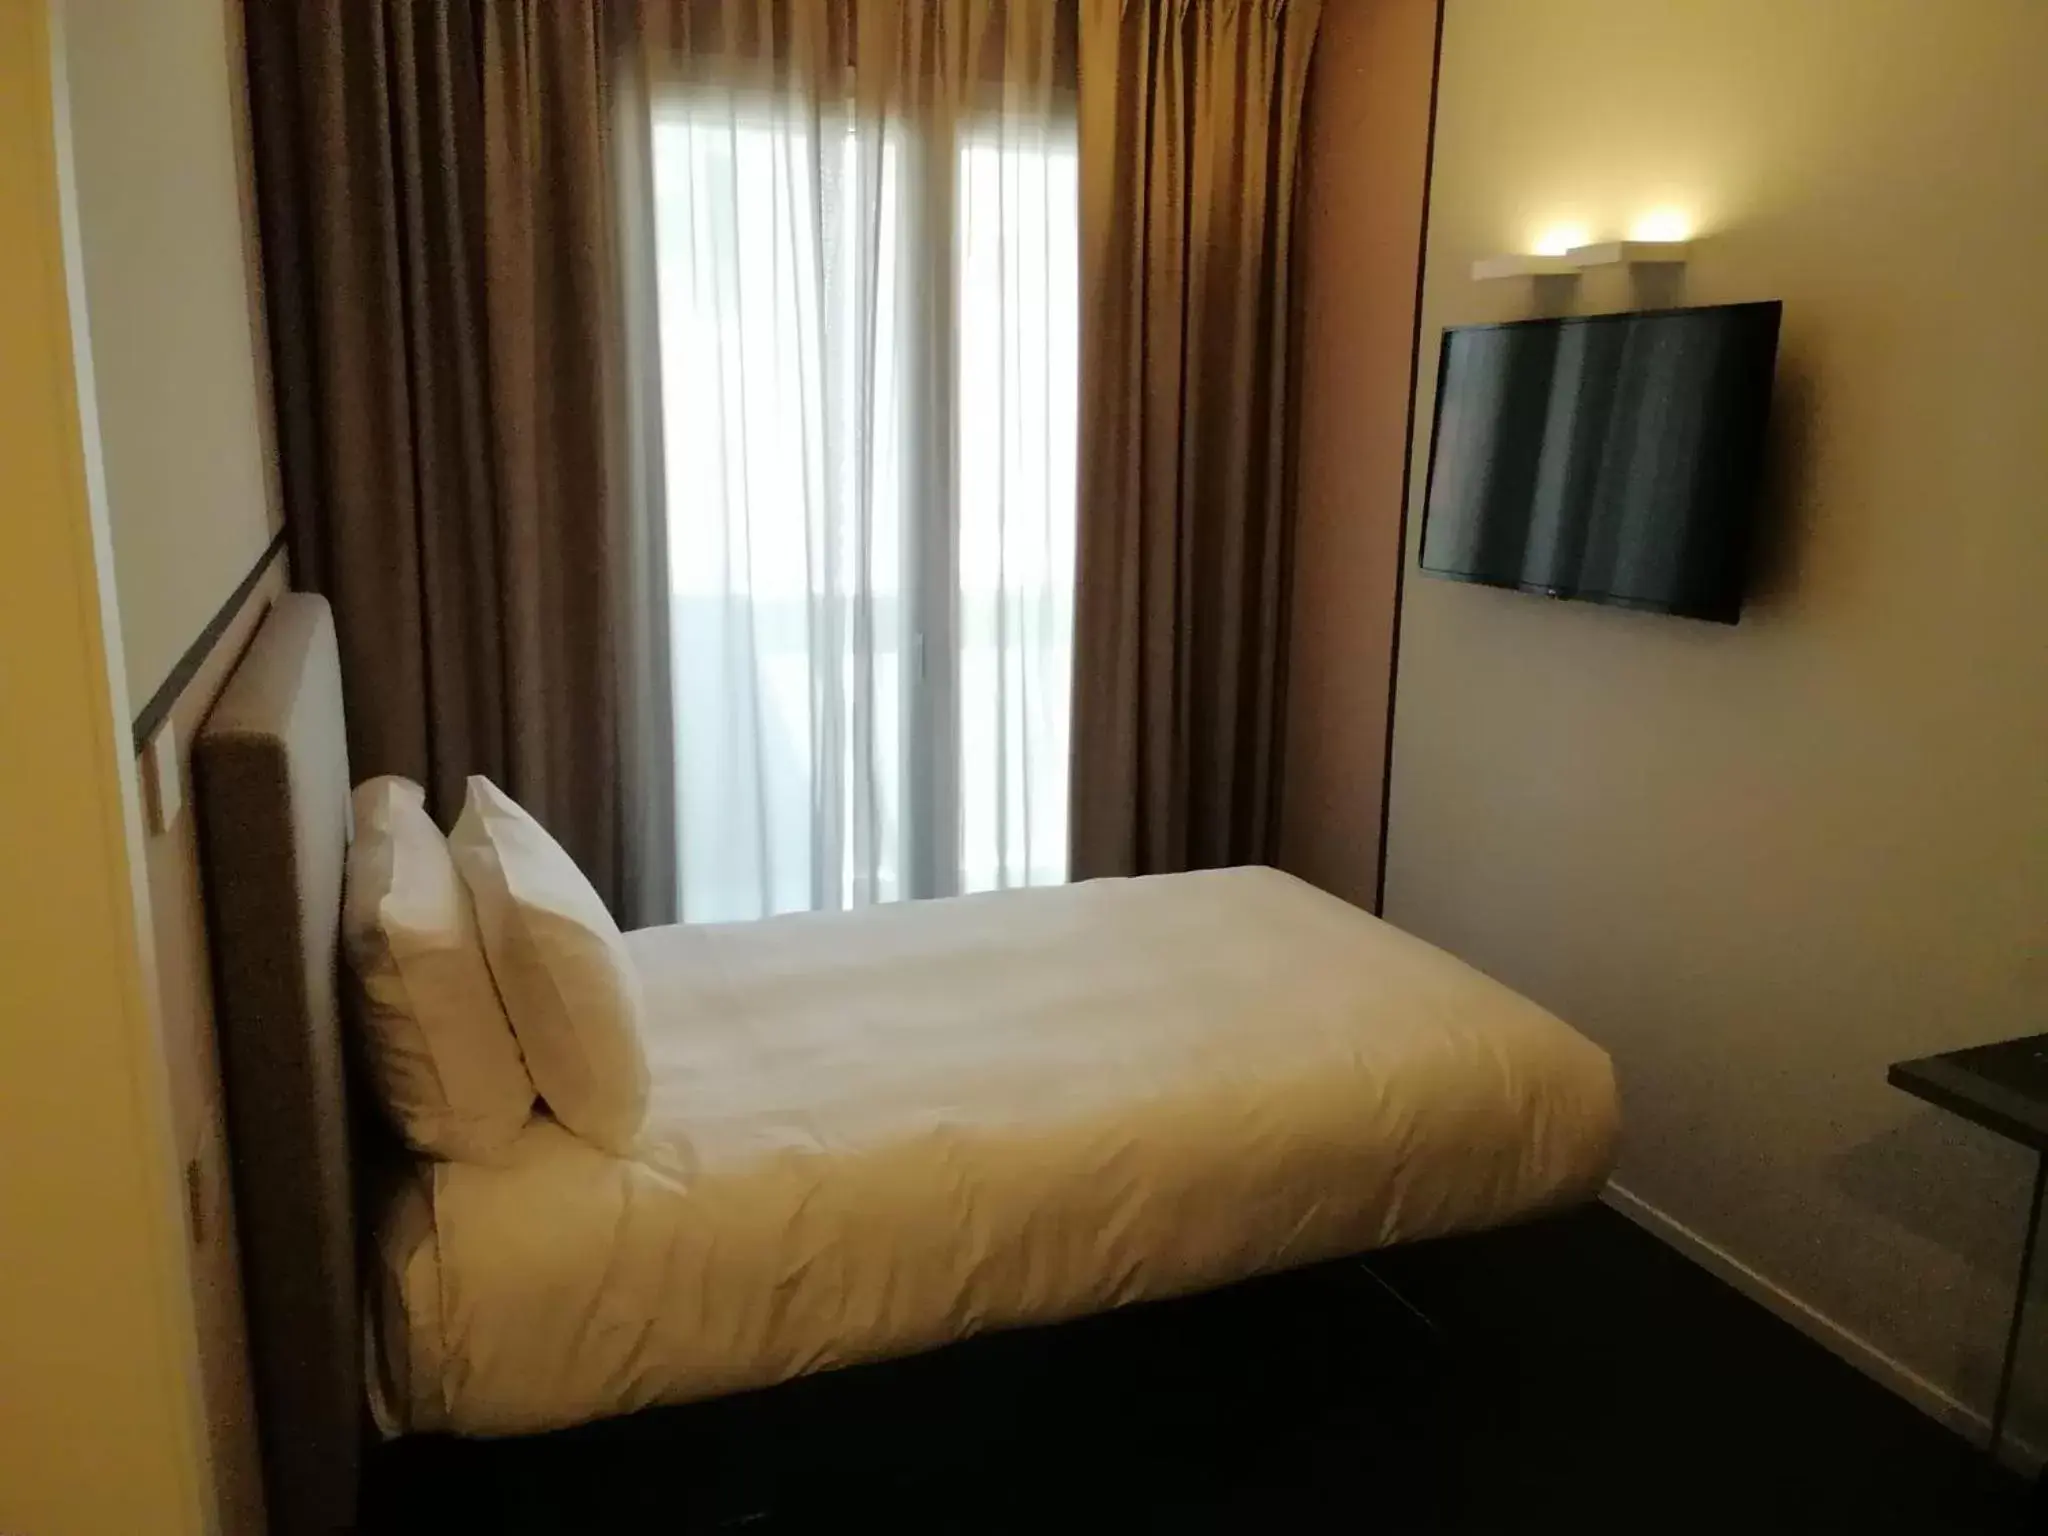 Bed in Open Hotel